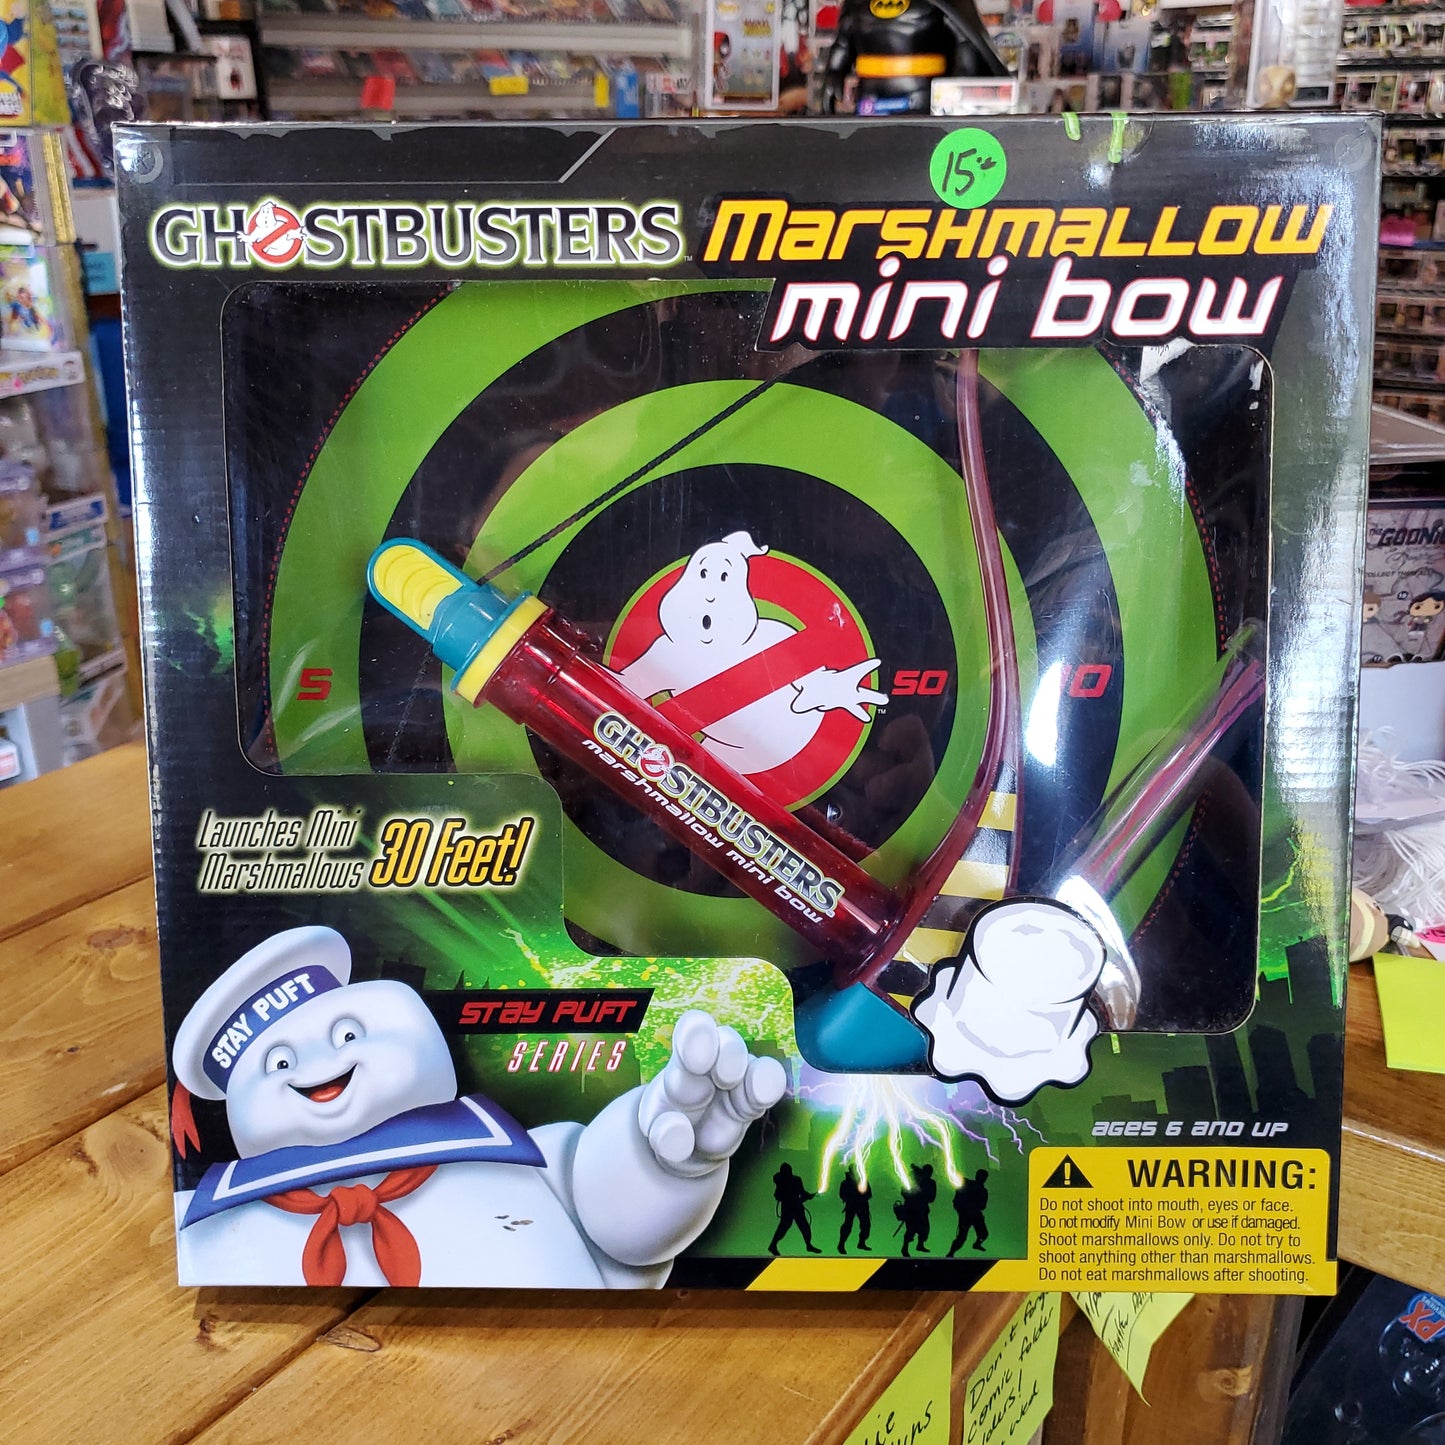 Ghostbusters Marshmallow Mini Bow